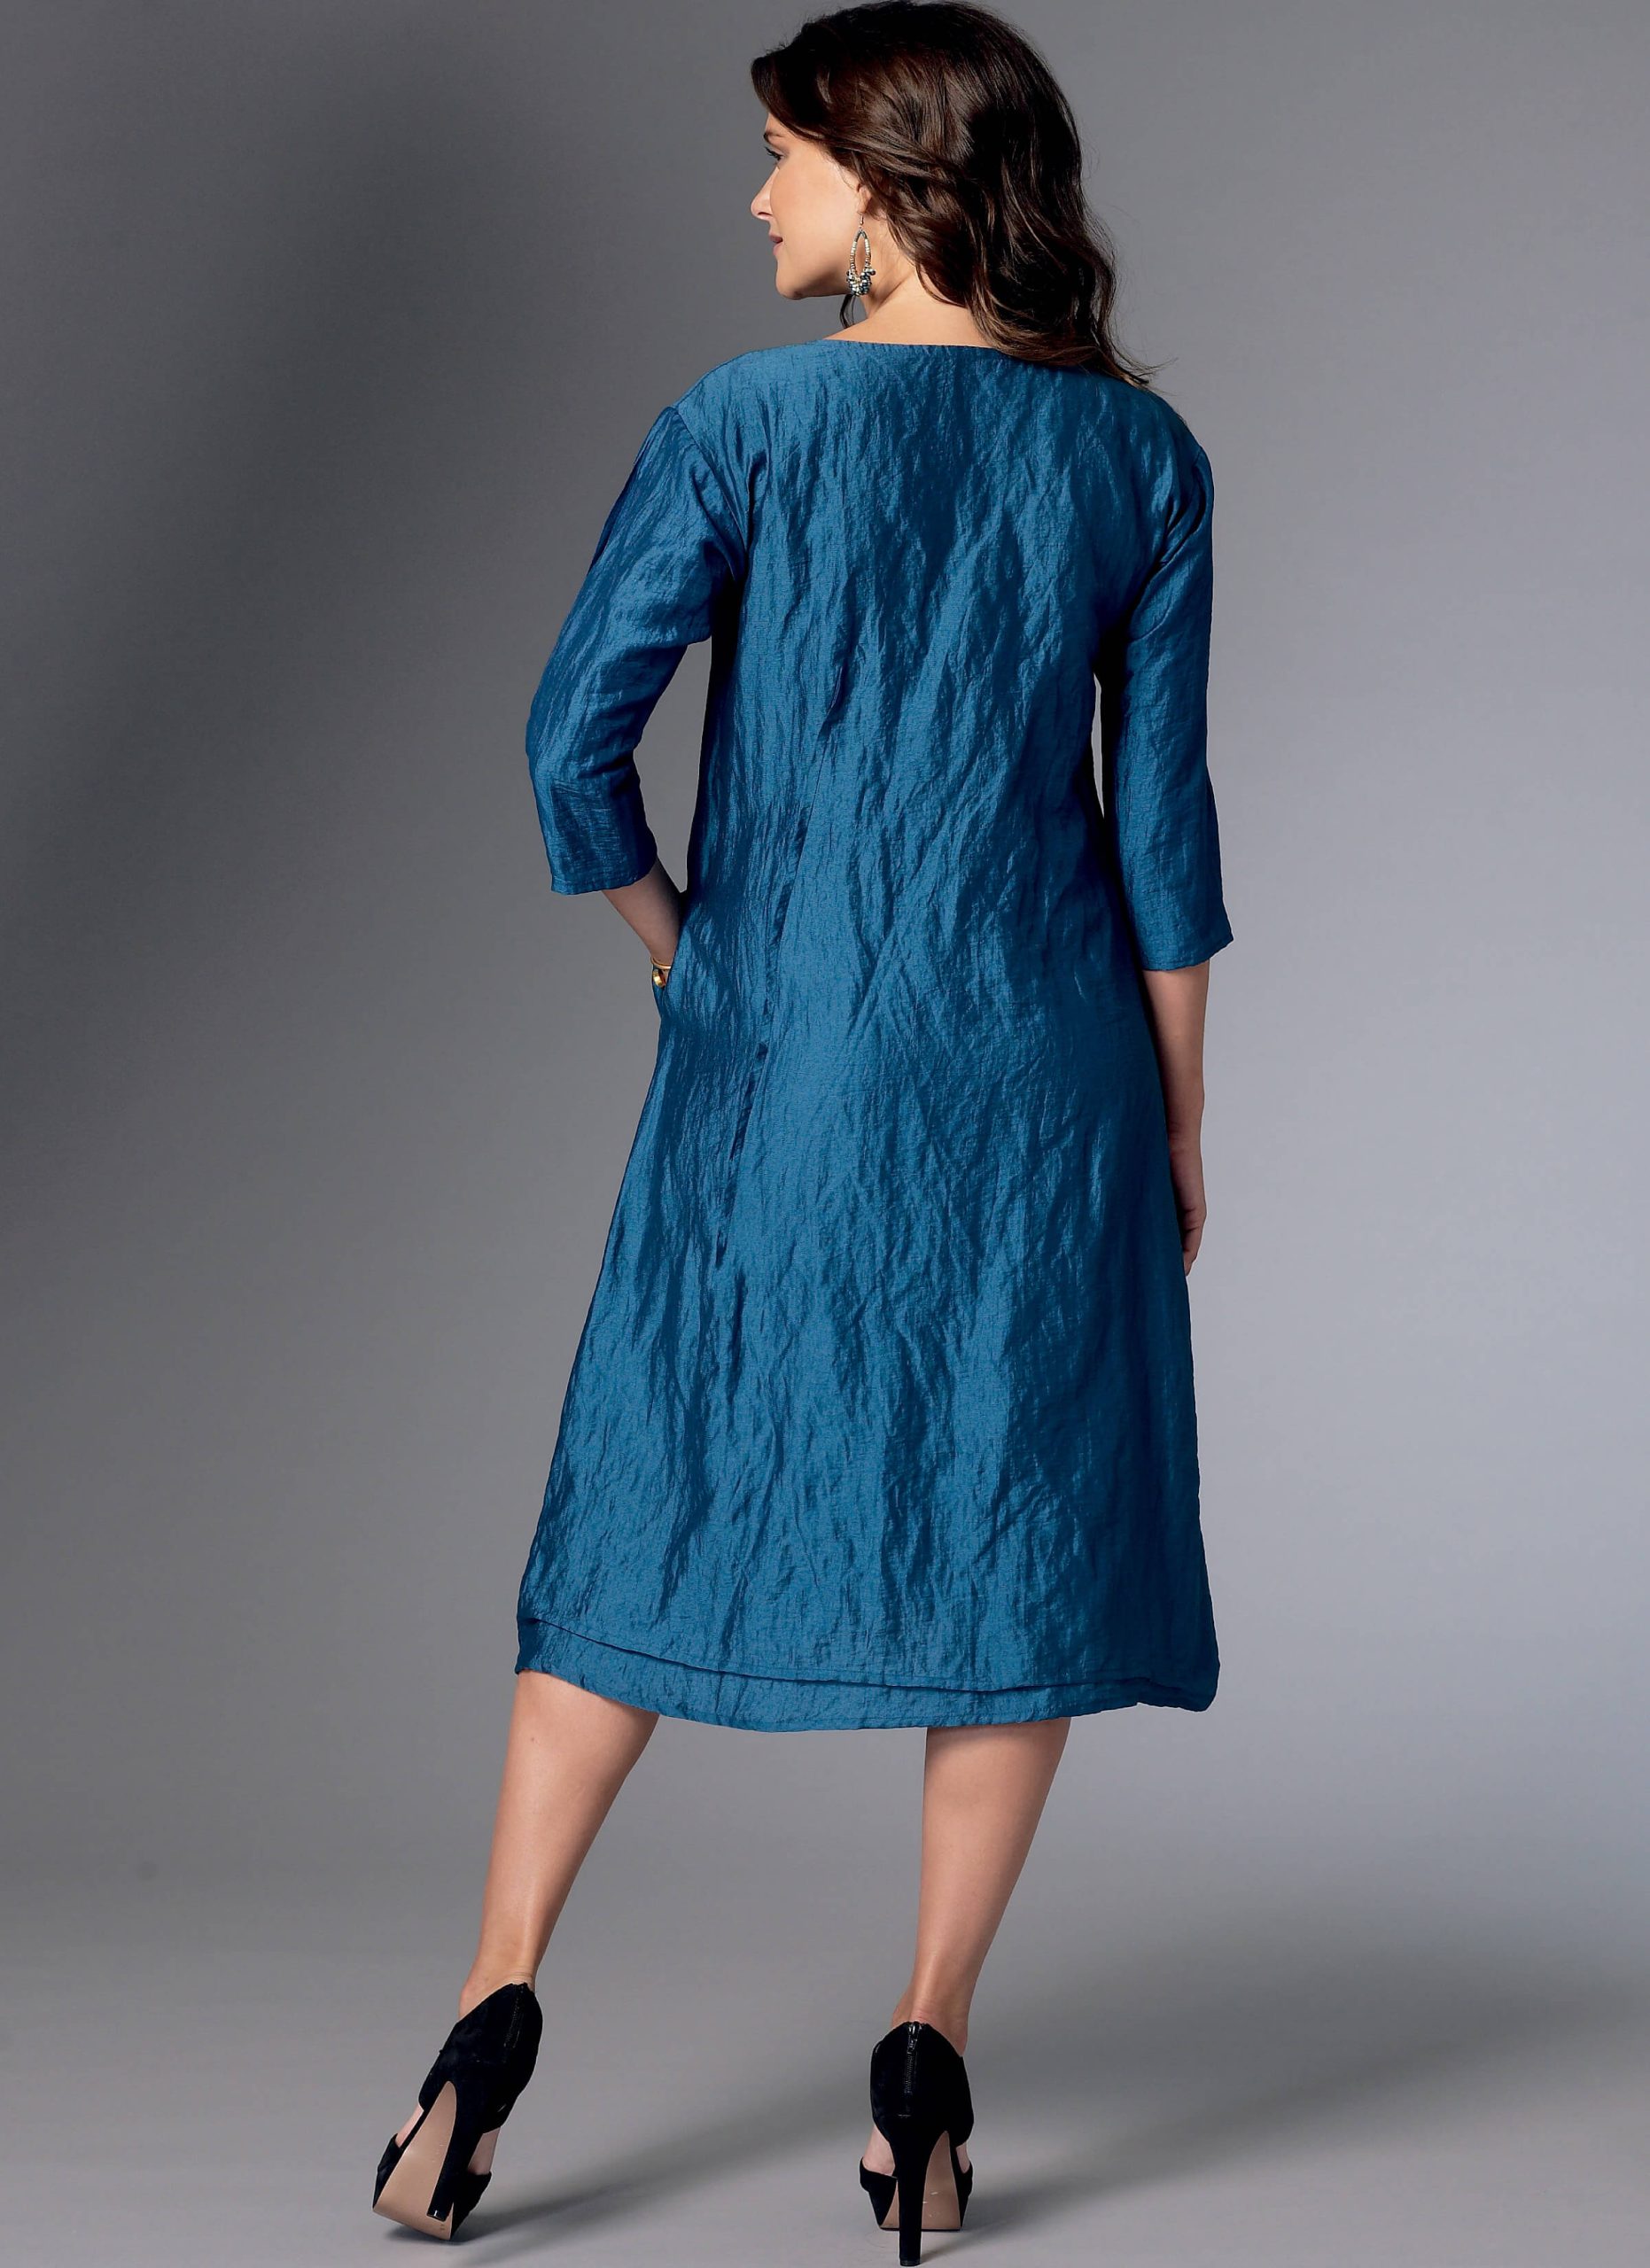 Butterick Sewing Pattern B6283 Misses' Dress